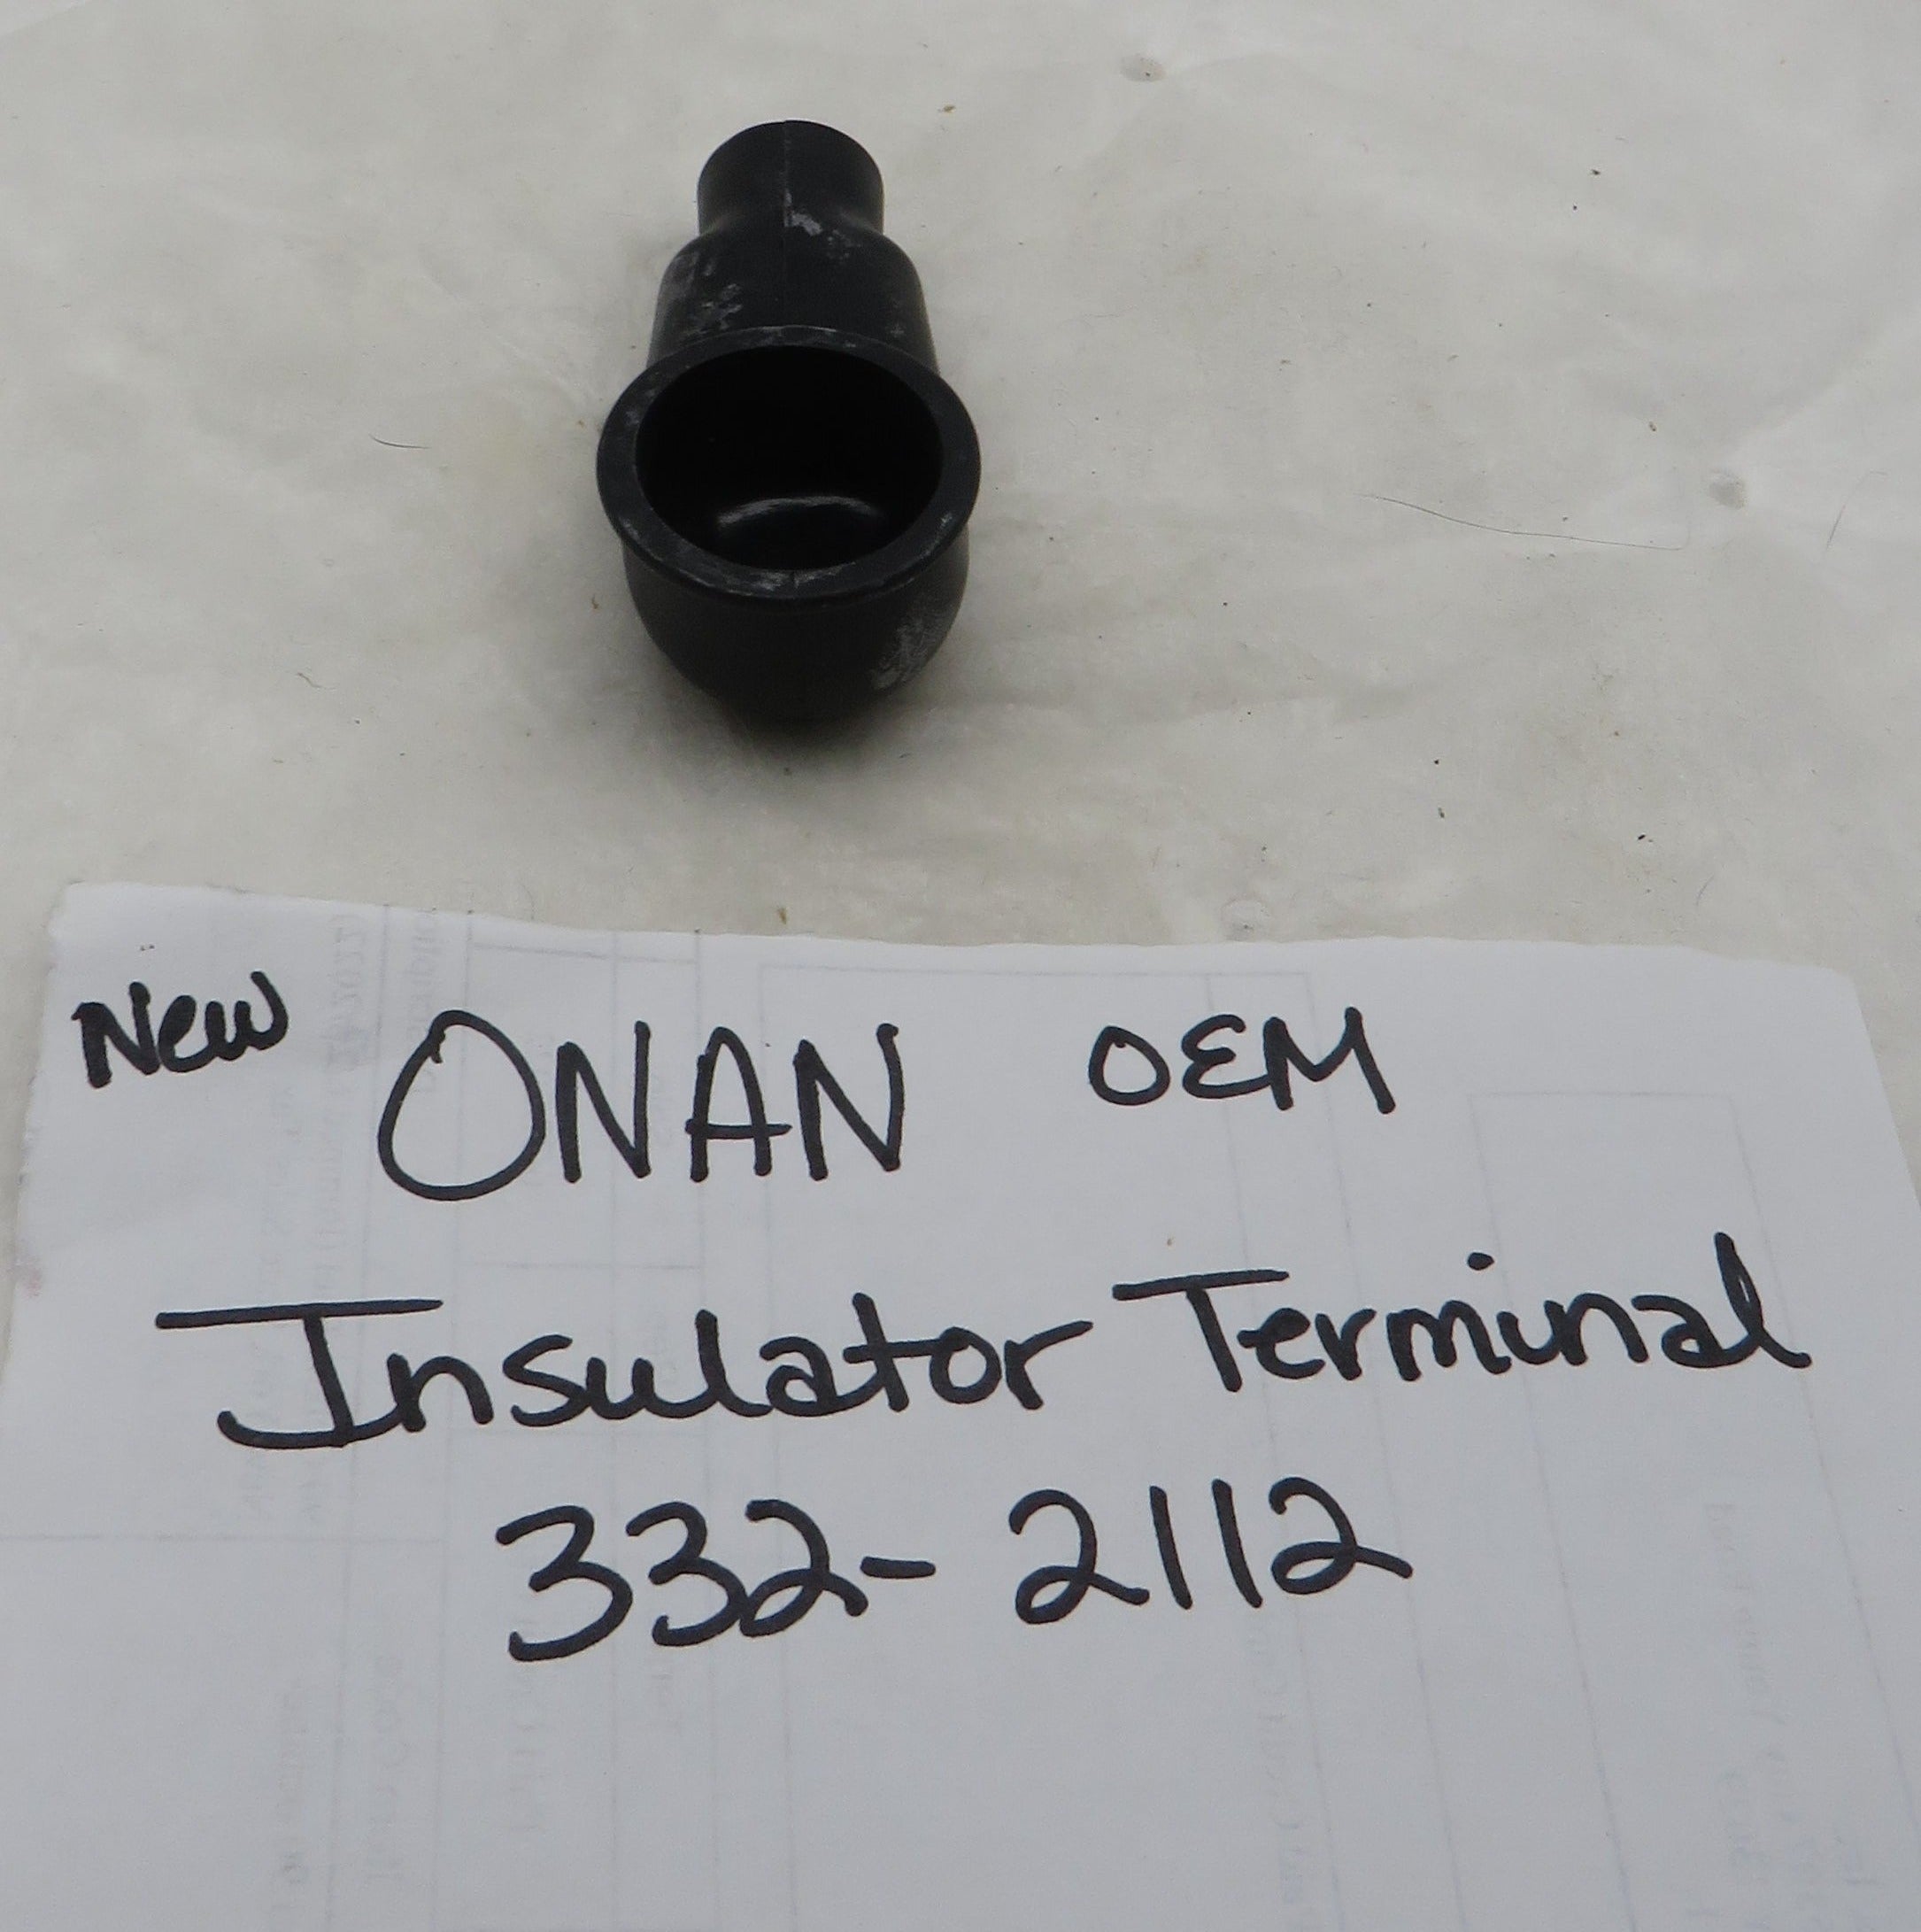 332-2112 Onan OEM Insulator Terminal 